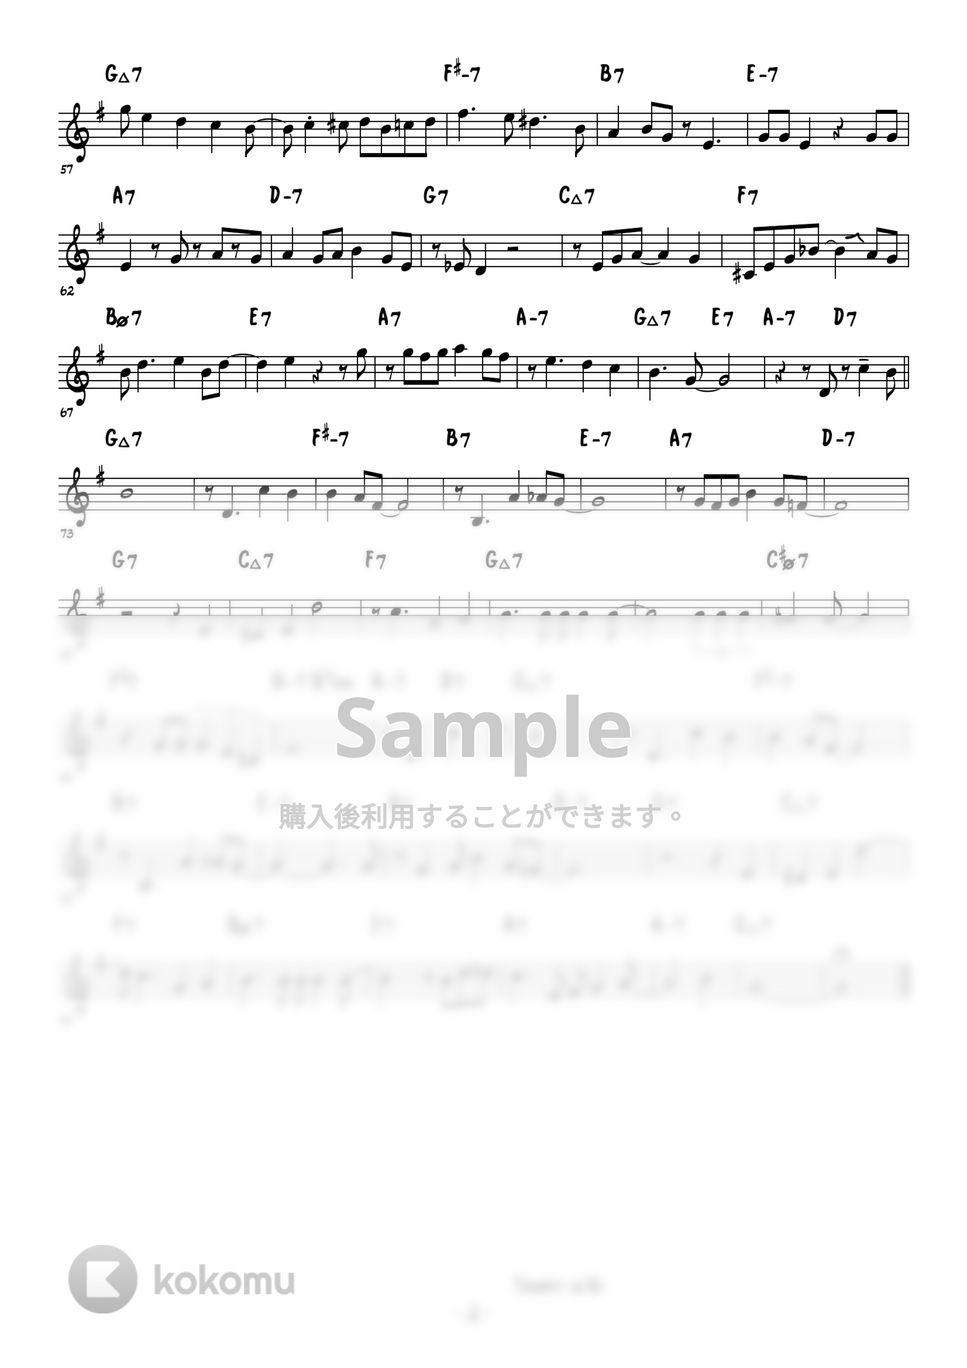 Billy Reid - I'll Close My Eyes (ジャズトランペット演奏例) by 高田将利